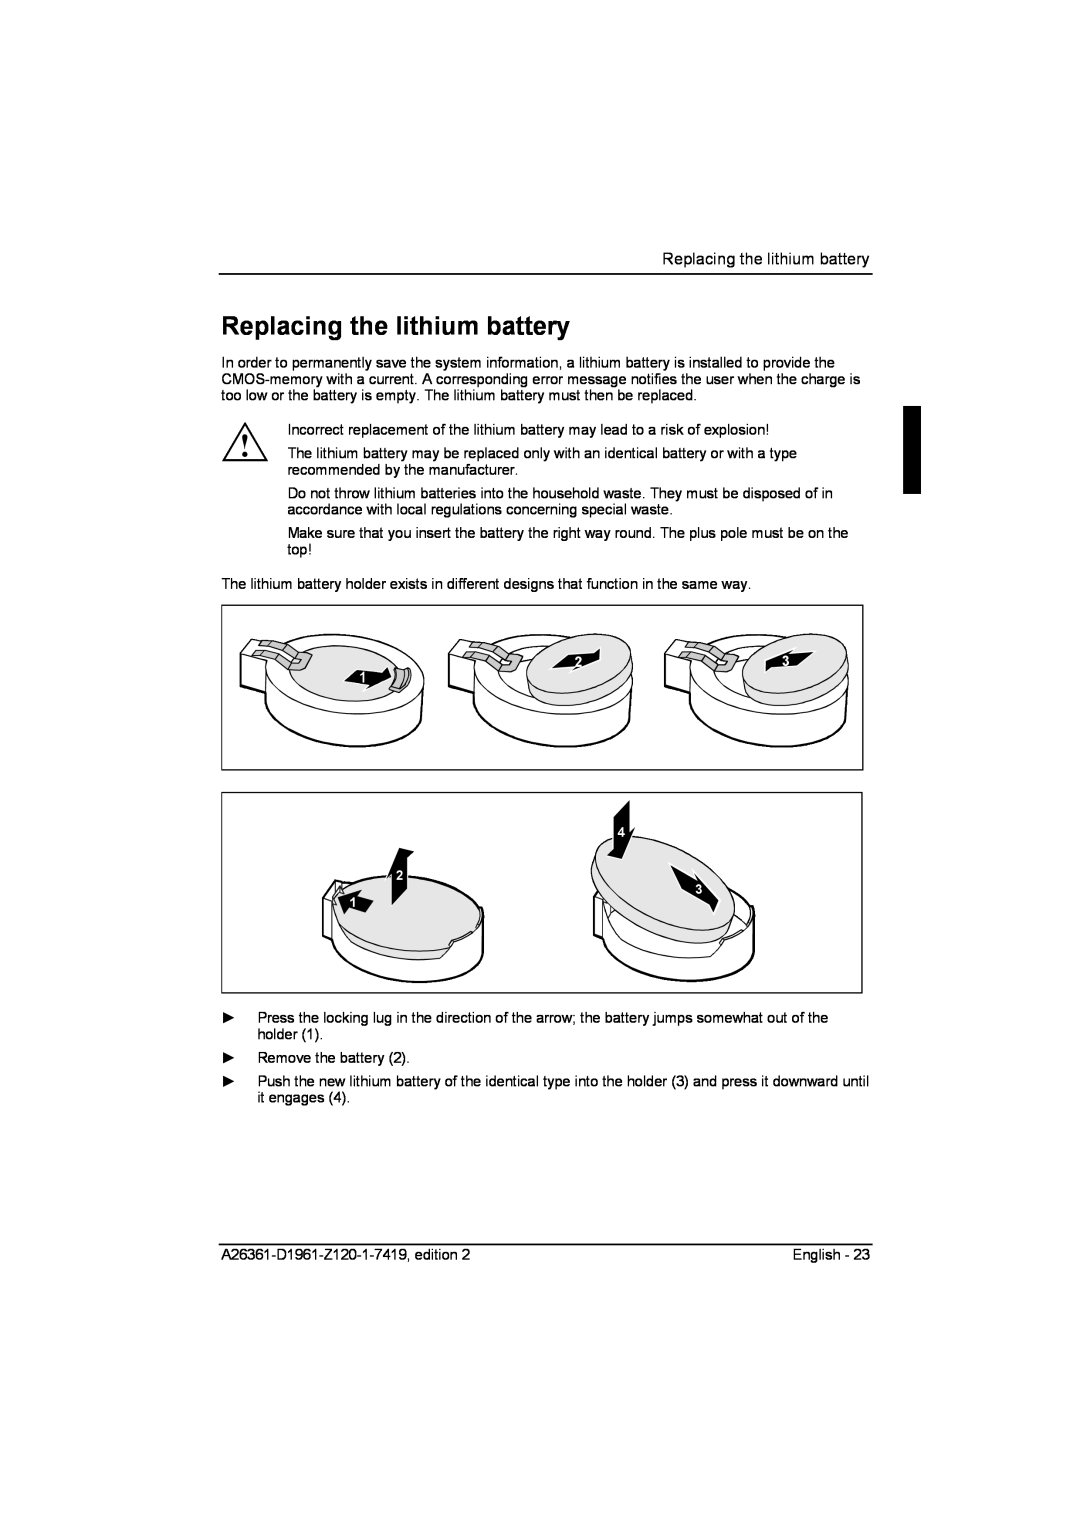 Fujitsu D1961 technical manual Replacing the lithium battery 